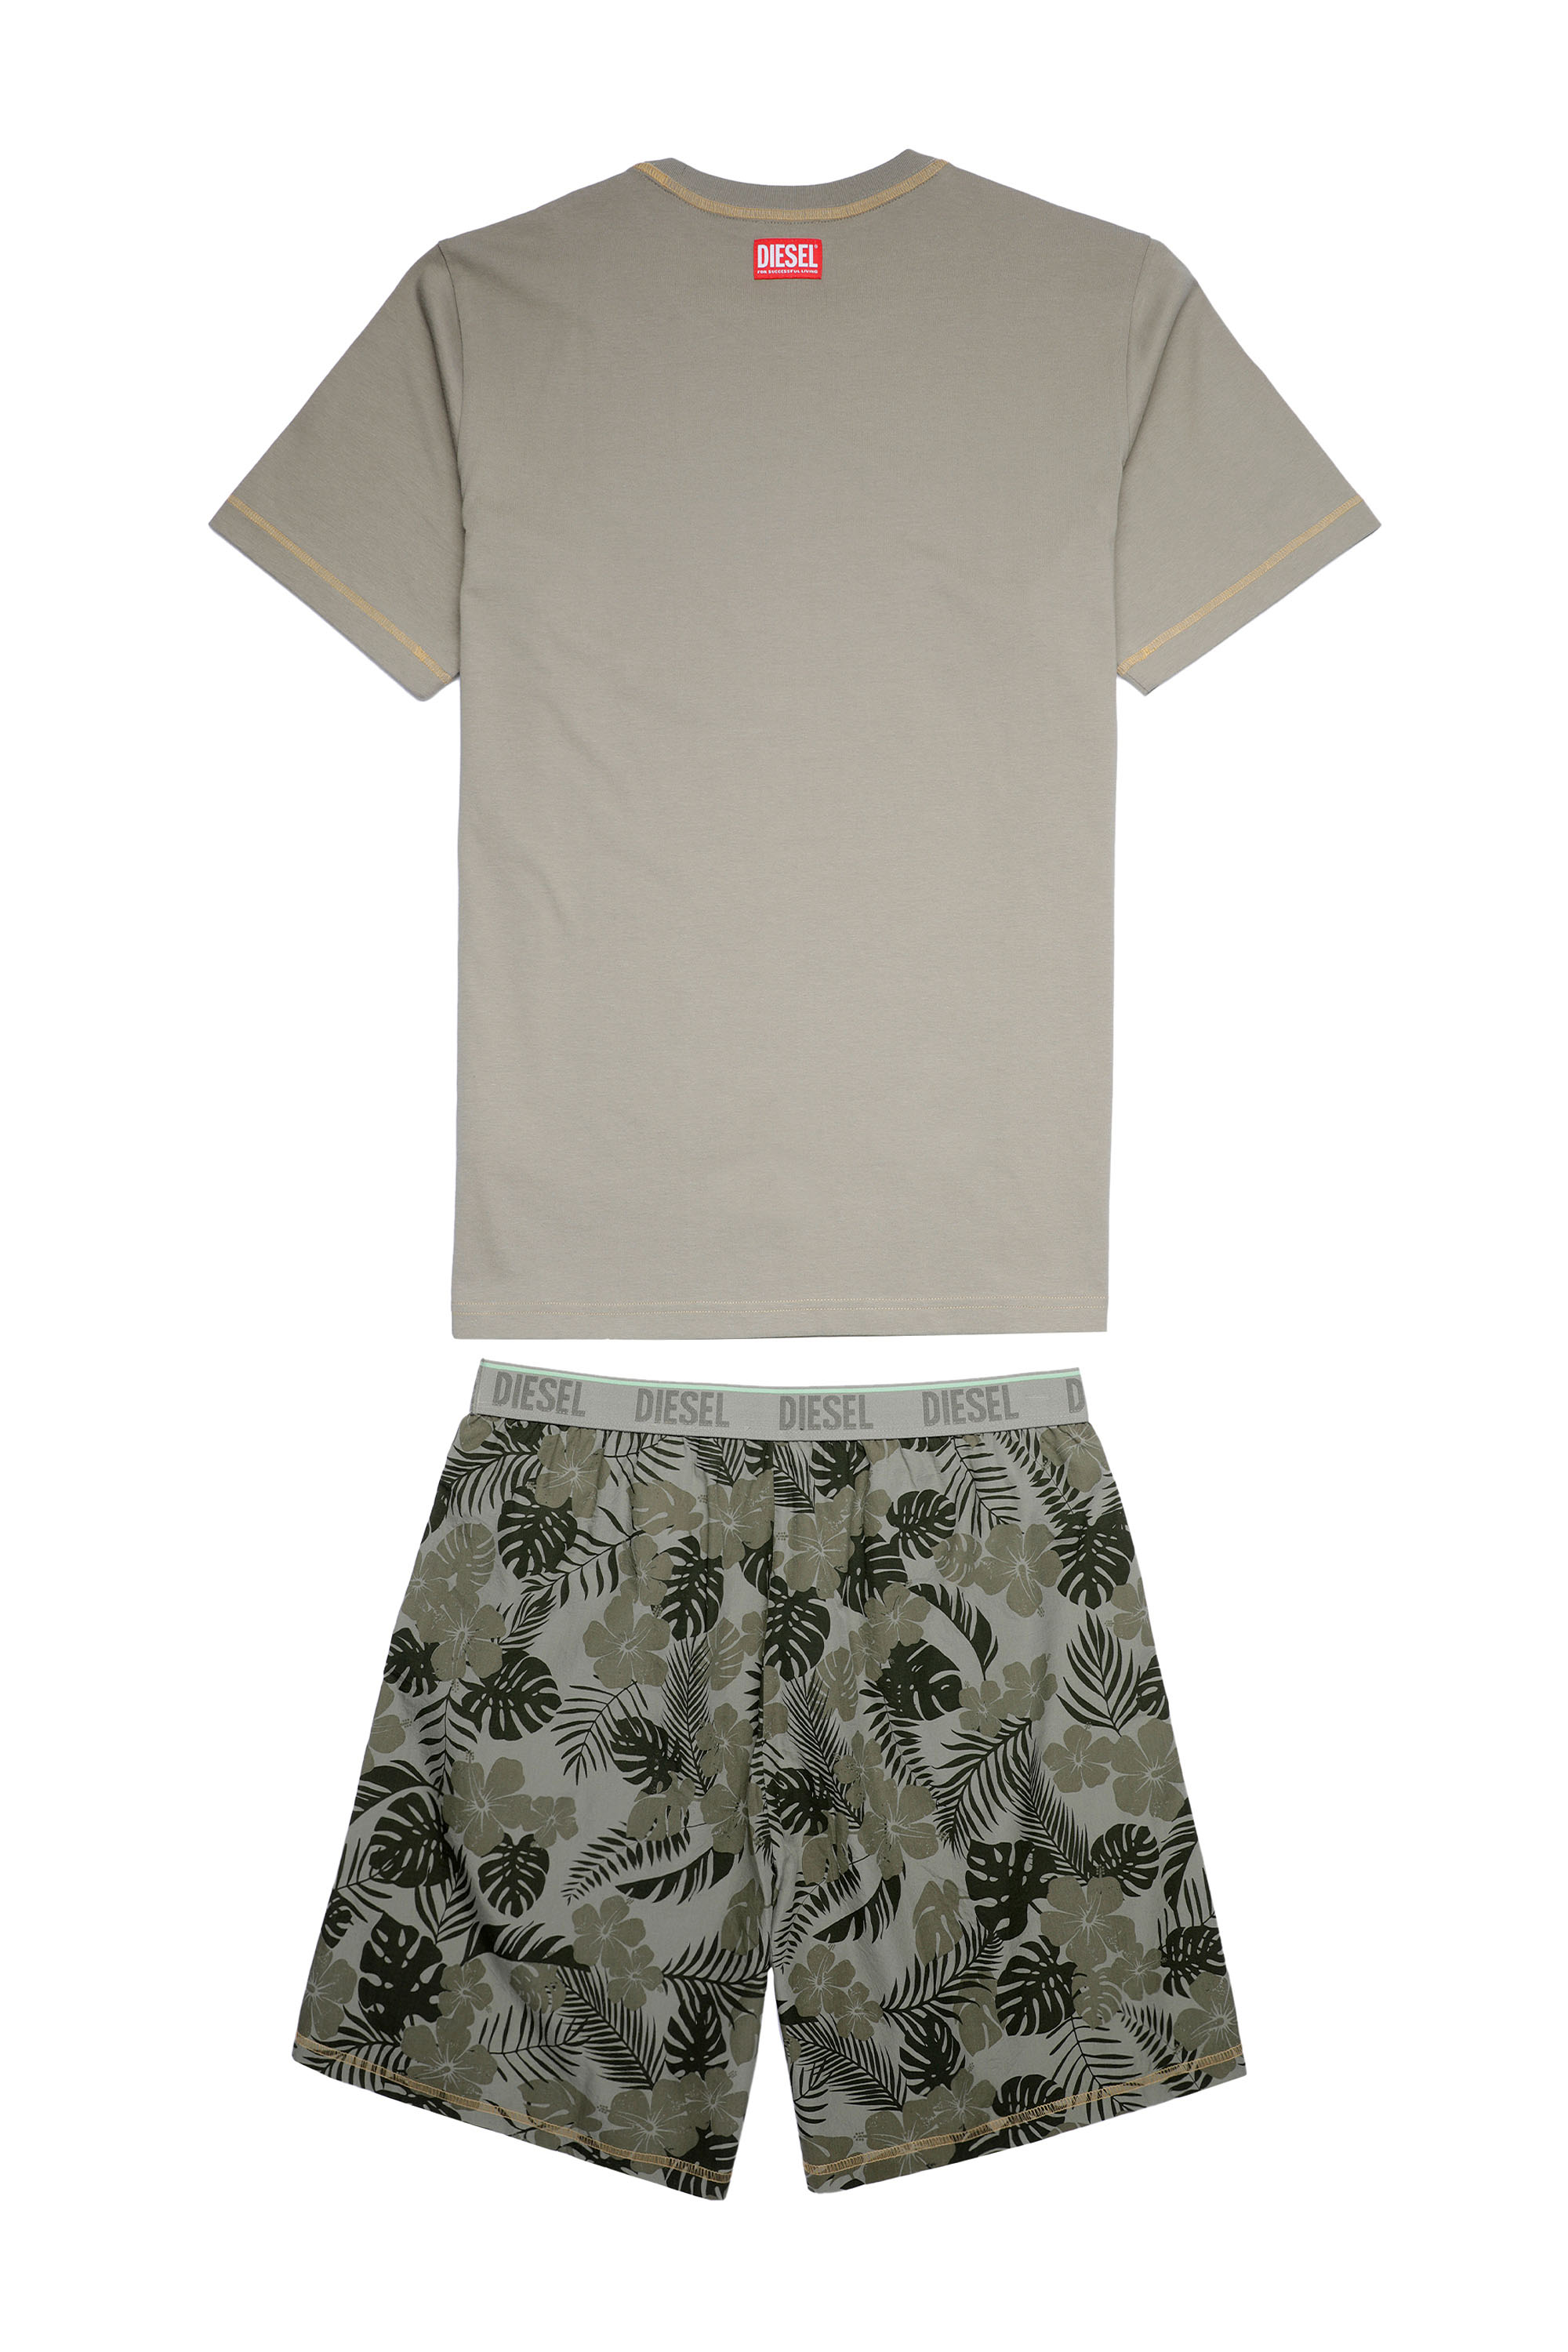 DIESEL Cotton Camouflage Pyjama Set in Green for Men Mens Clothing Nightwear and sleepwear 